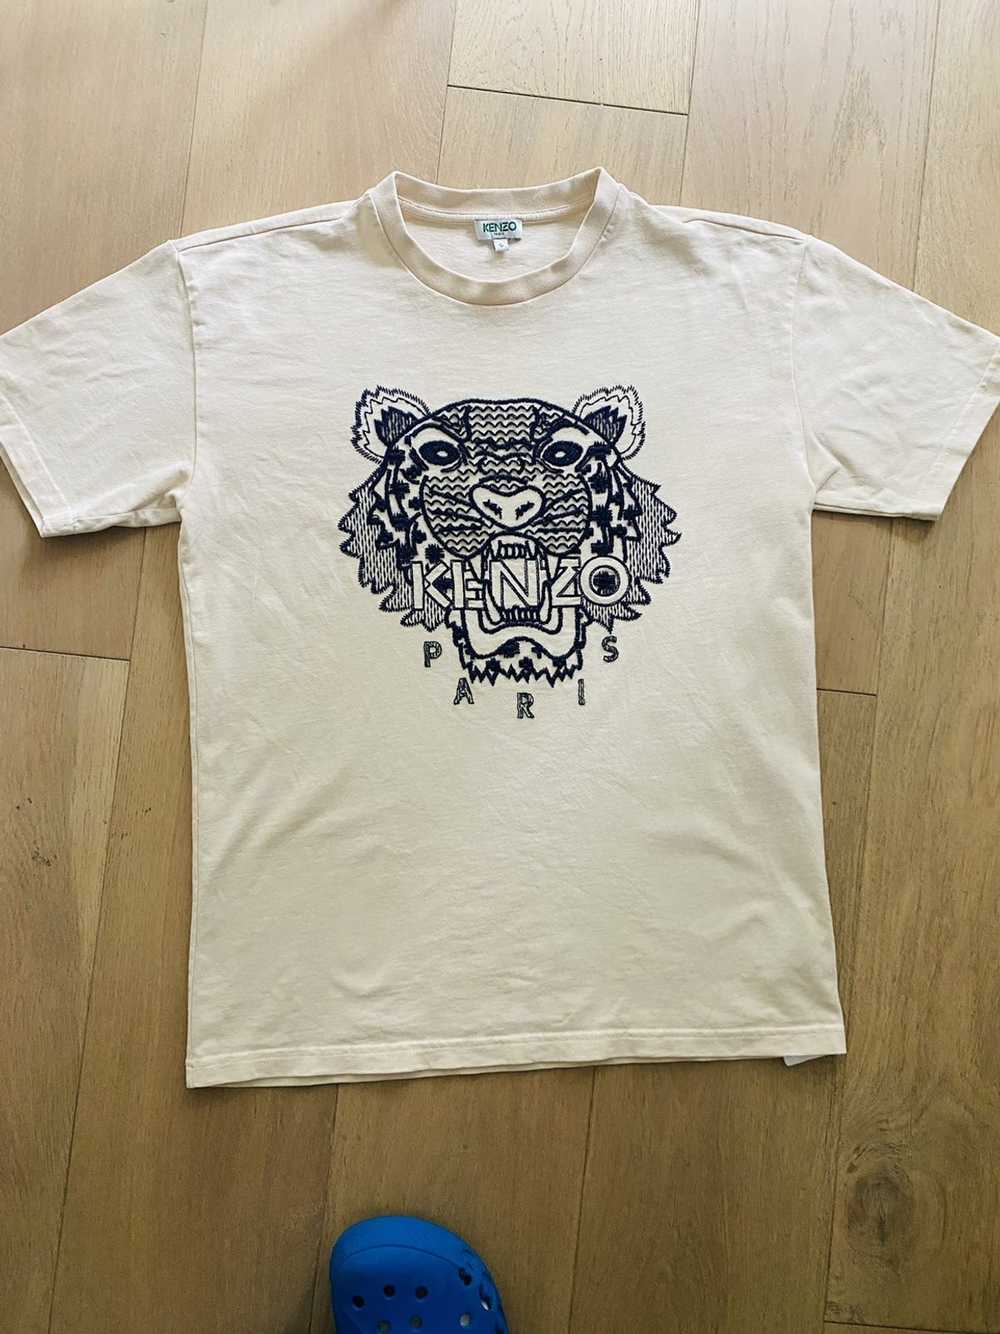 Kenzo Kenzo Paris tan tiger stitched T-shirt sz S - image 1